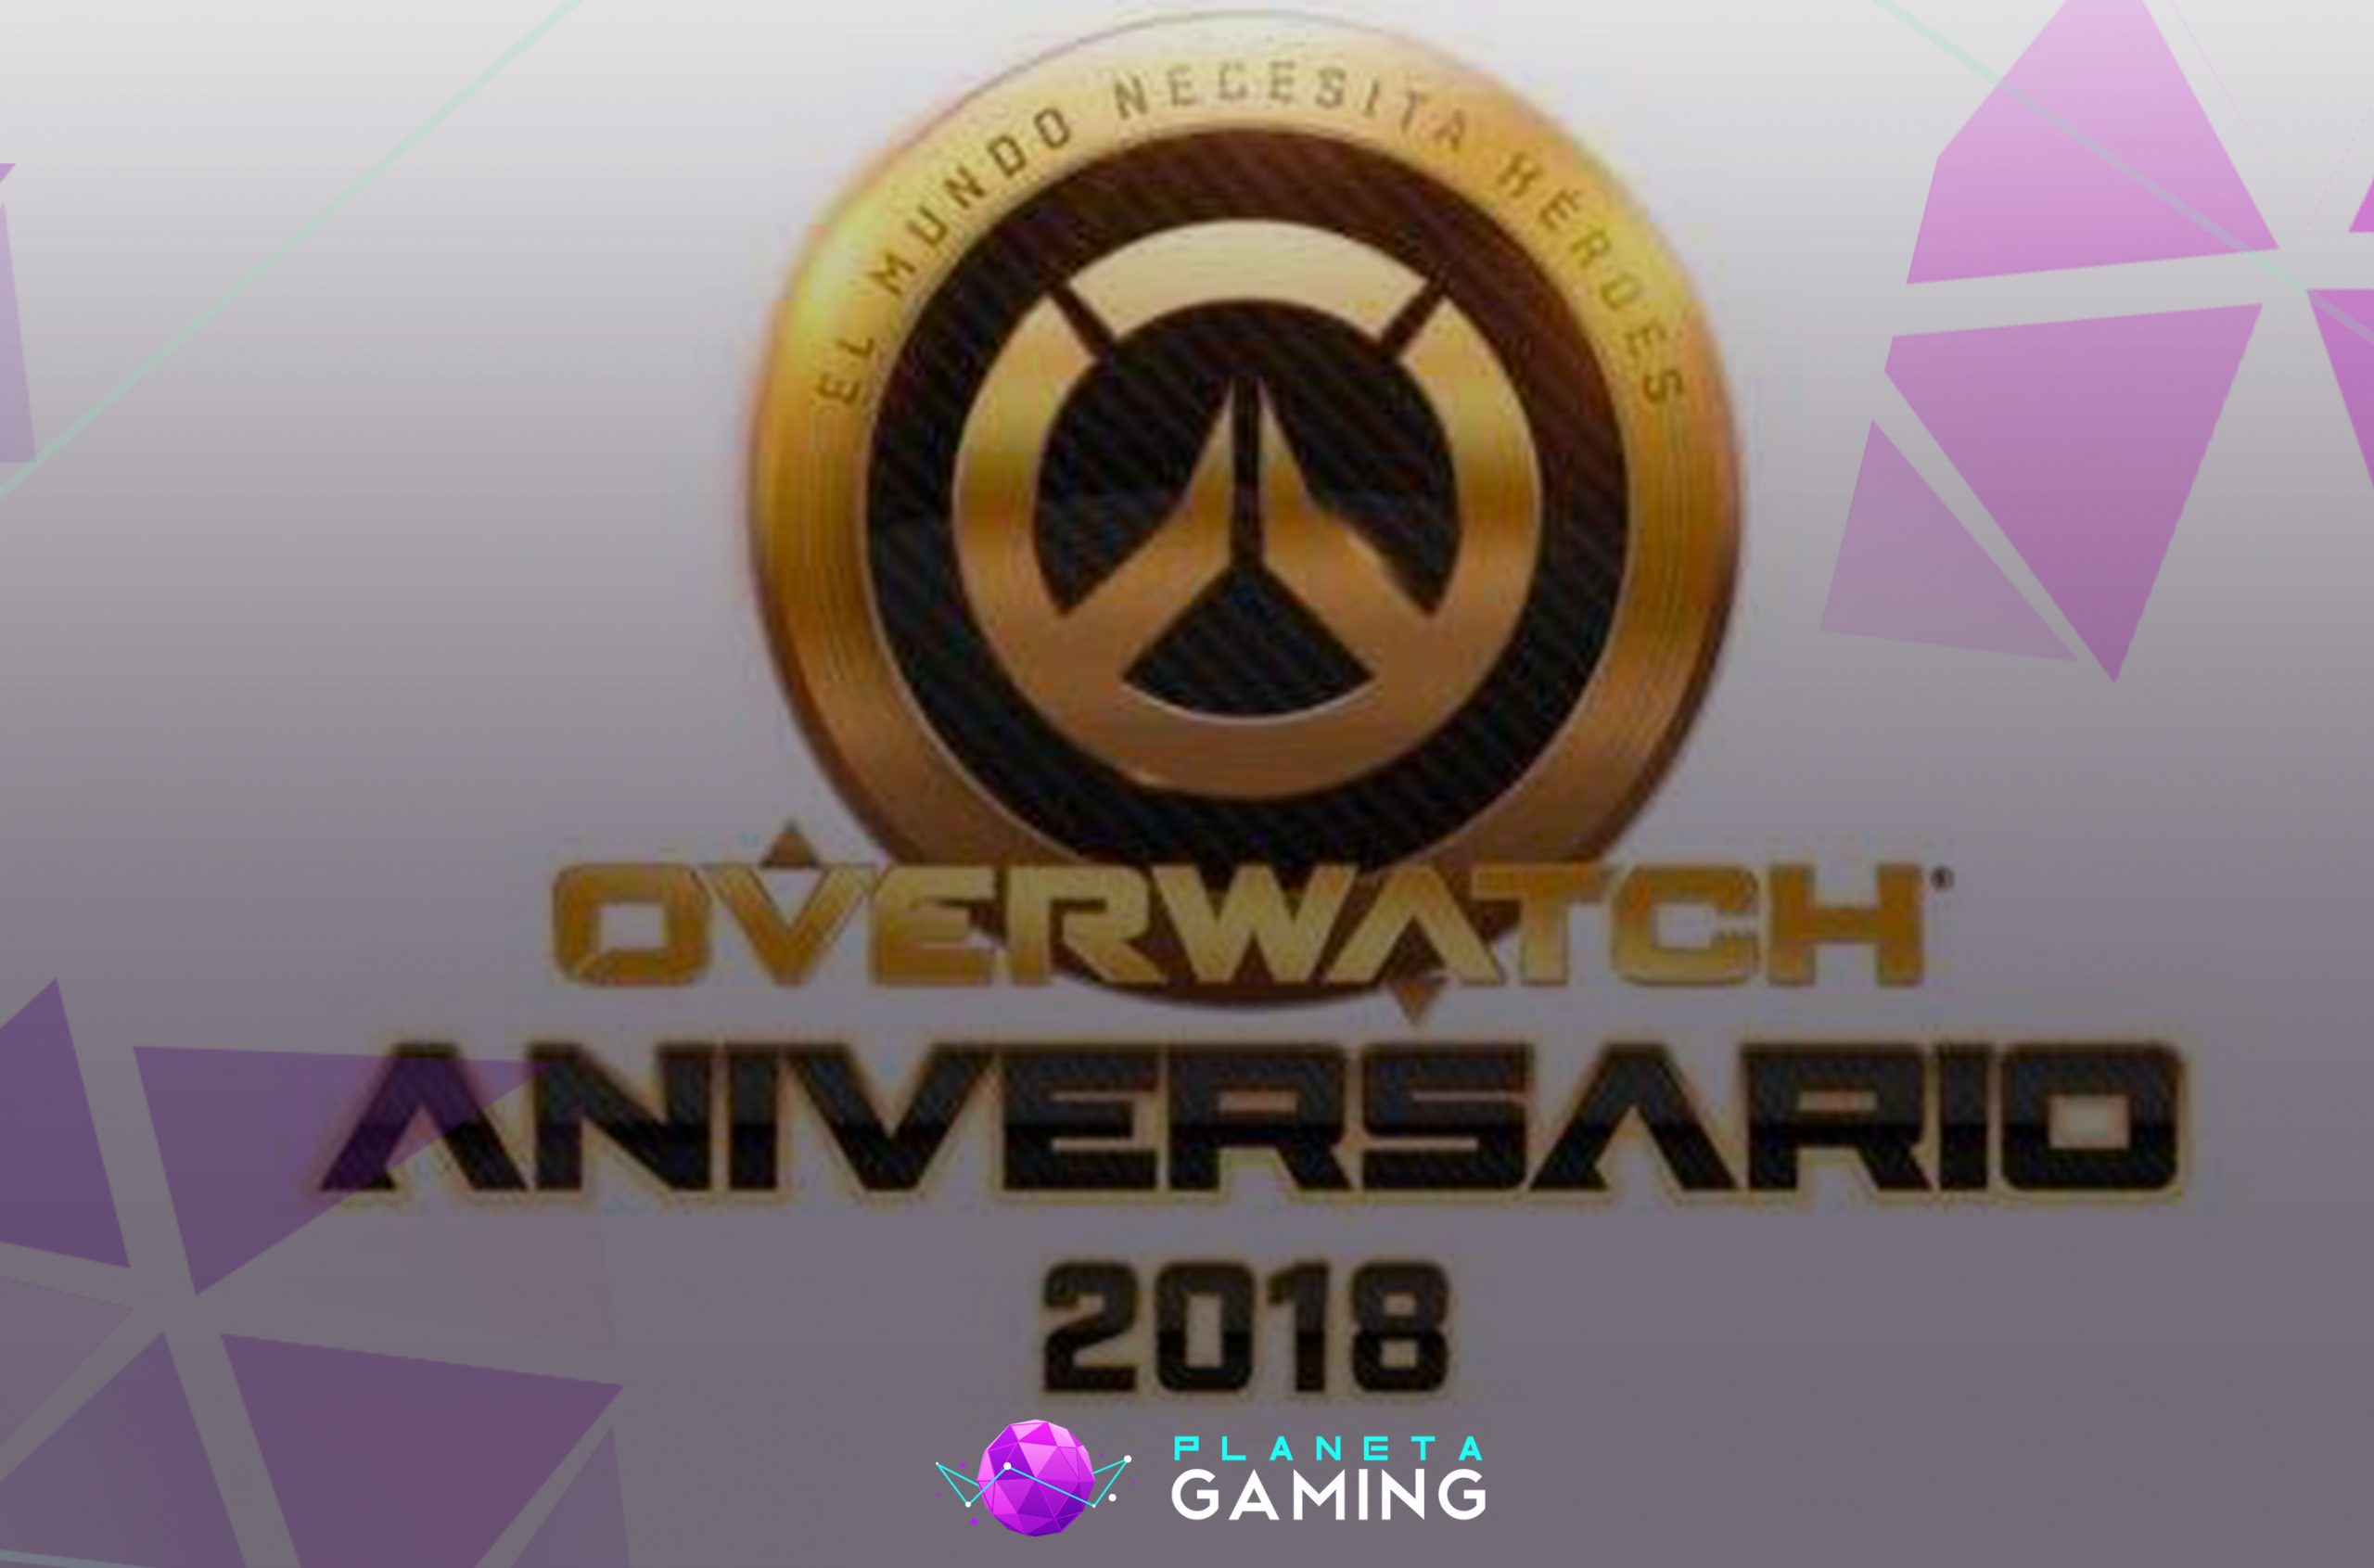 Overwatch Aniversario 2018